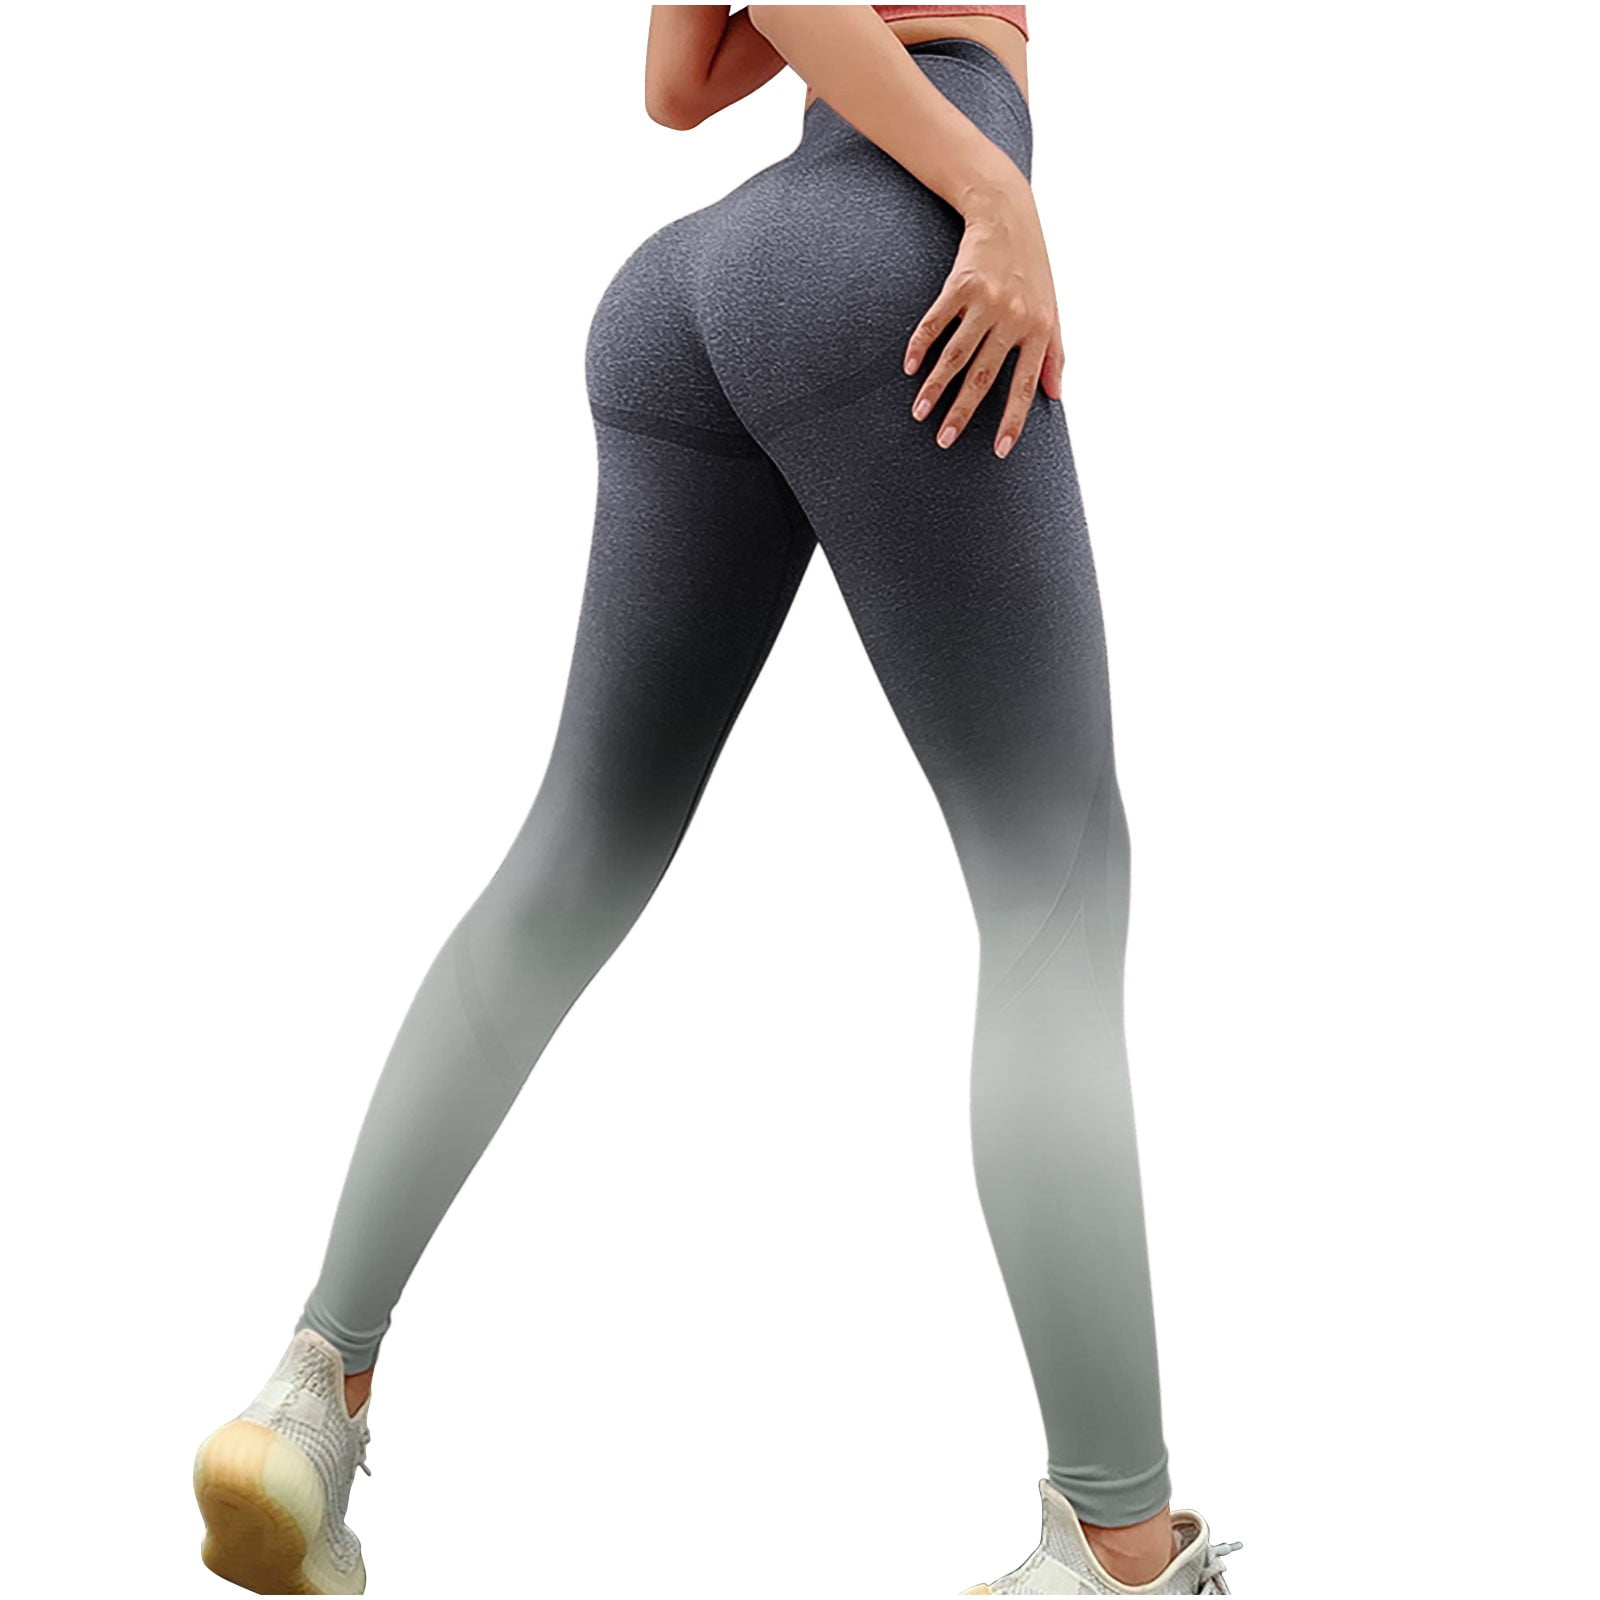 Women's High Waisted Yoga Leggings Workout Pants - Black / S